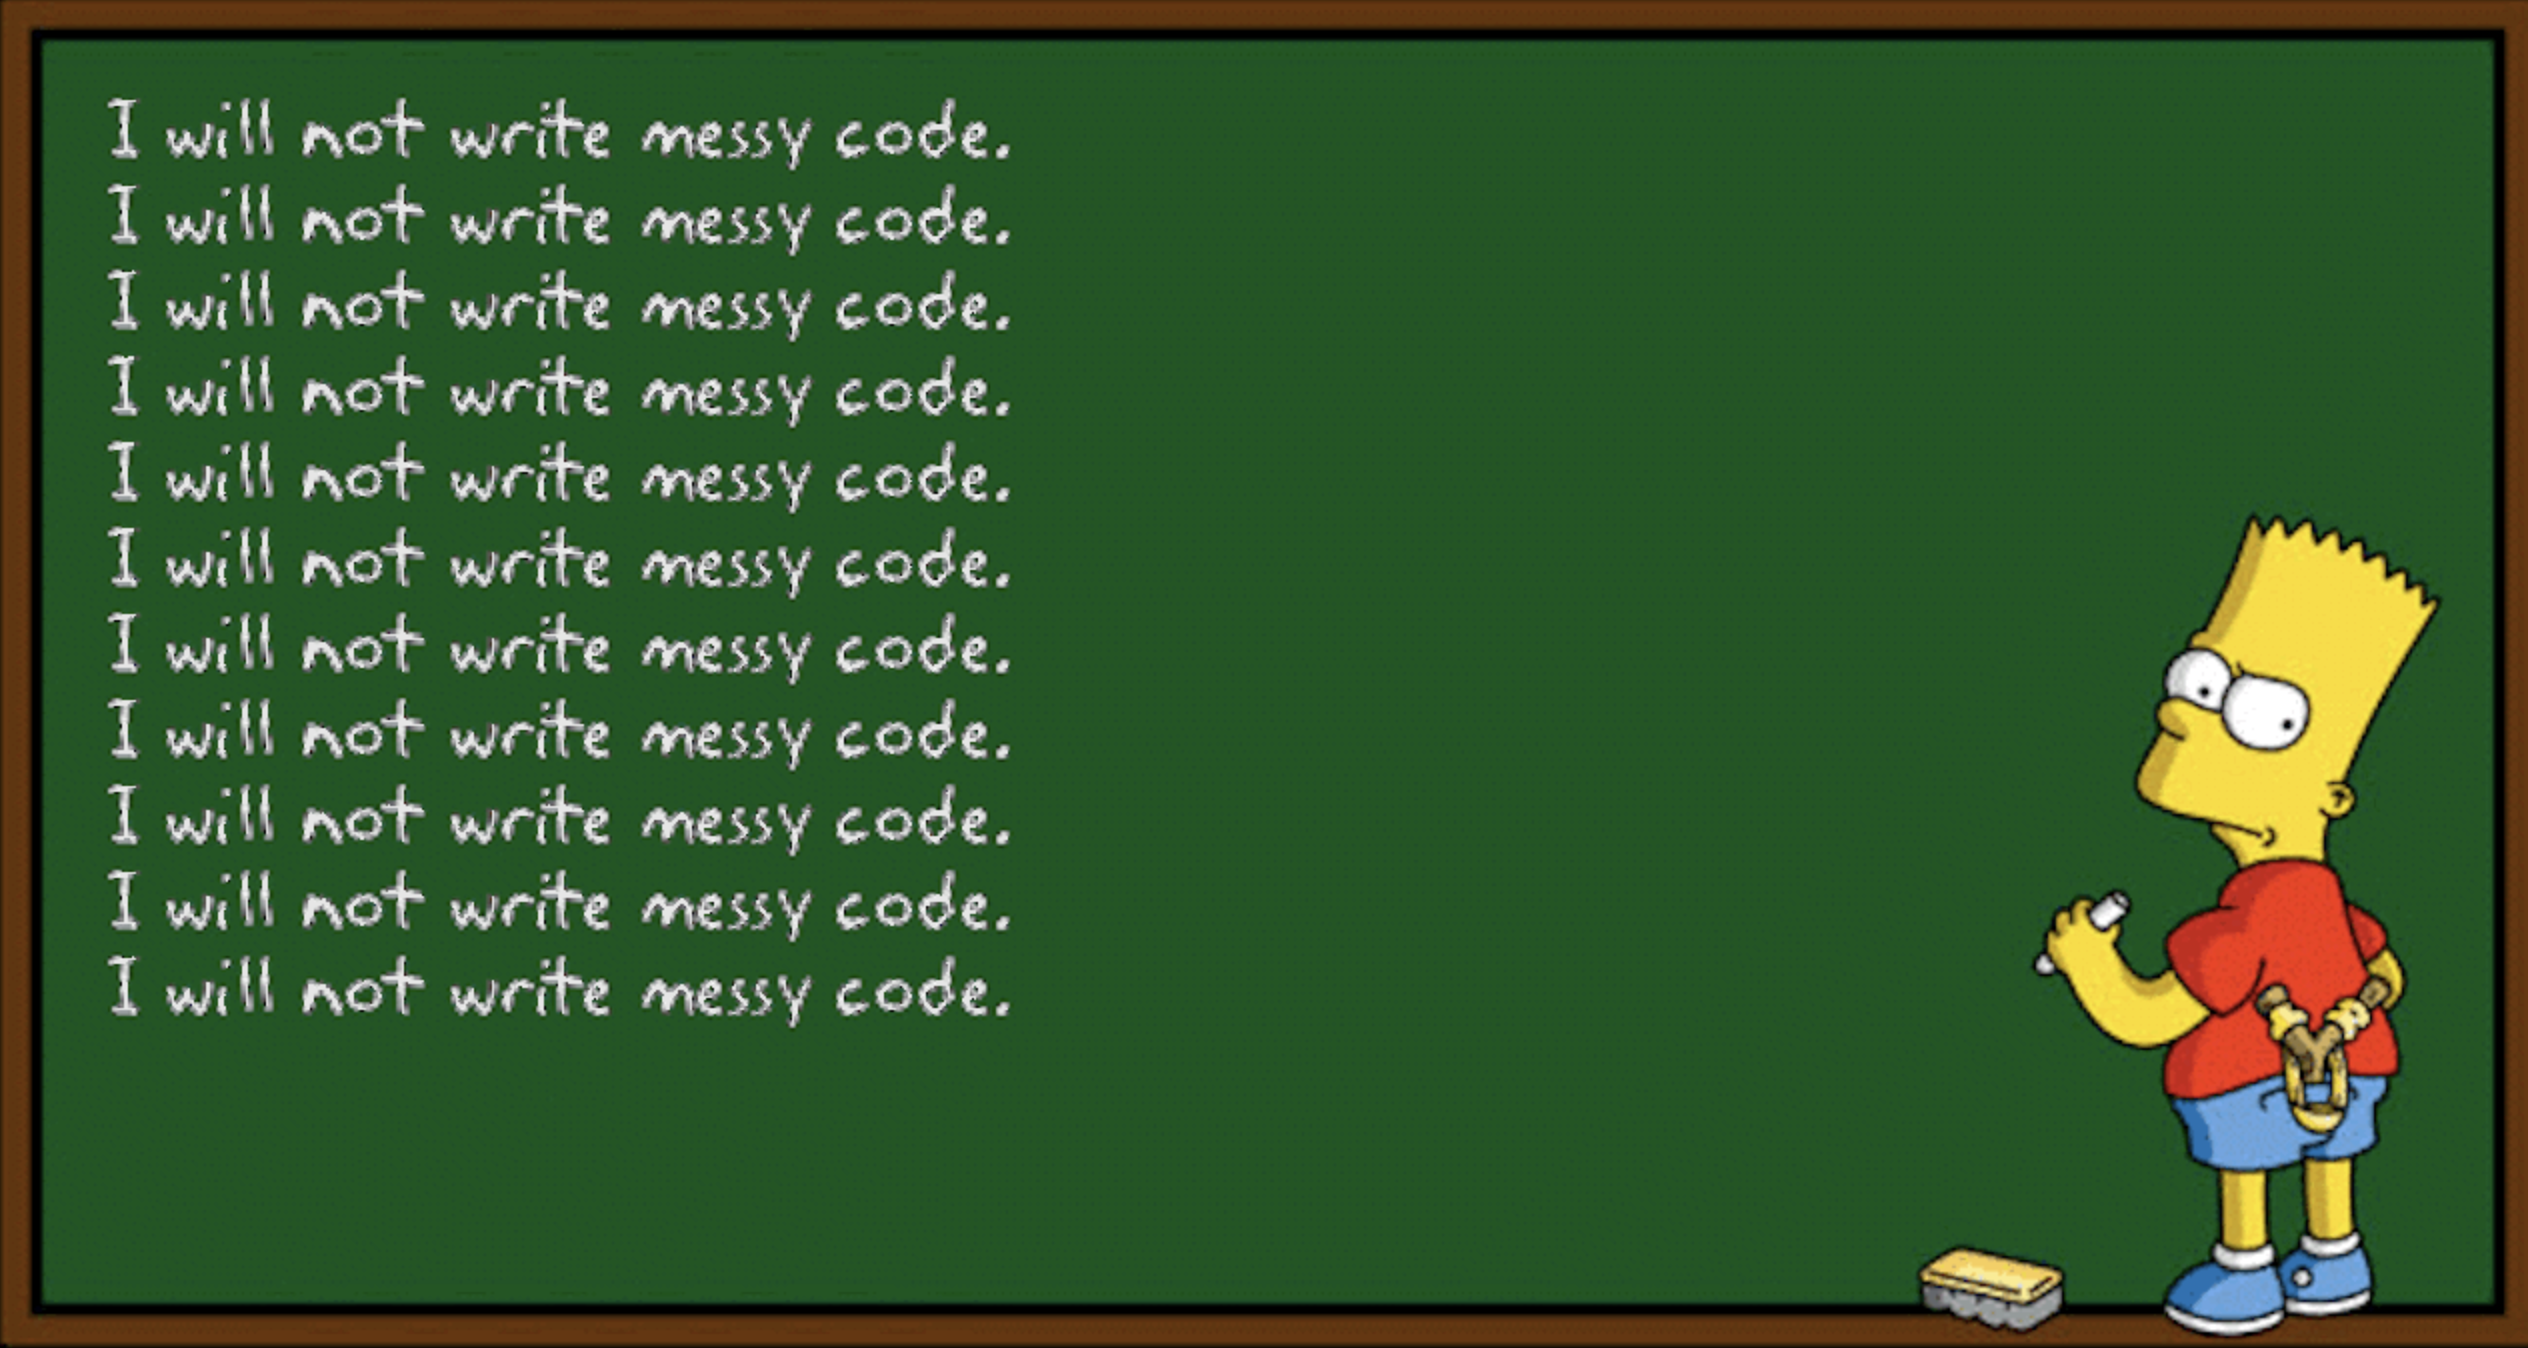 I will not write messy code